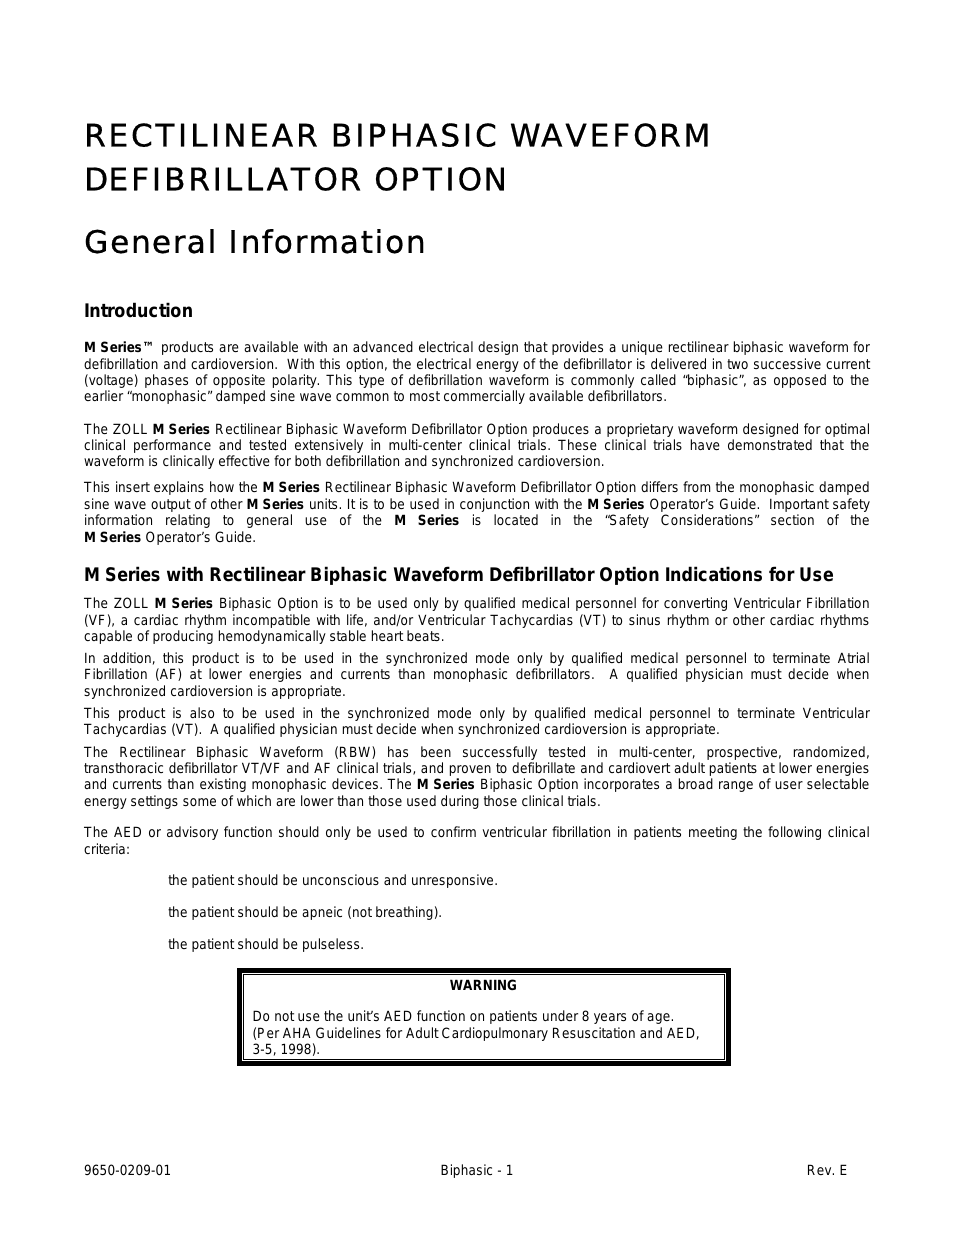 M Series Defibrillator Rev E BiPhasic